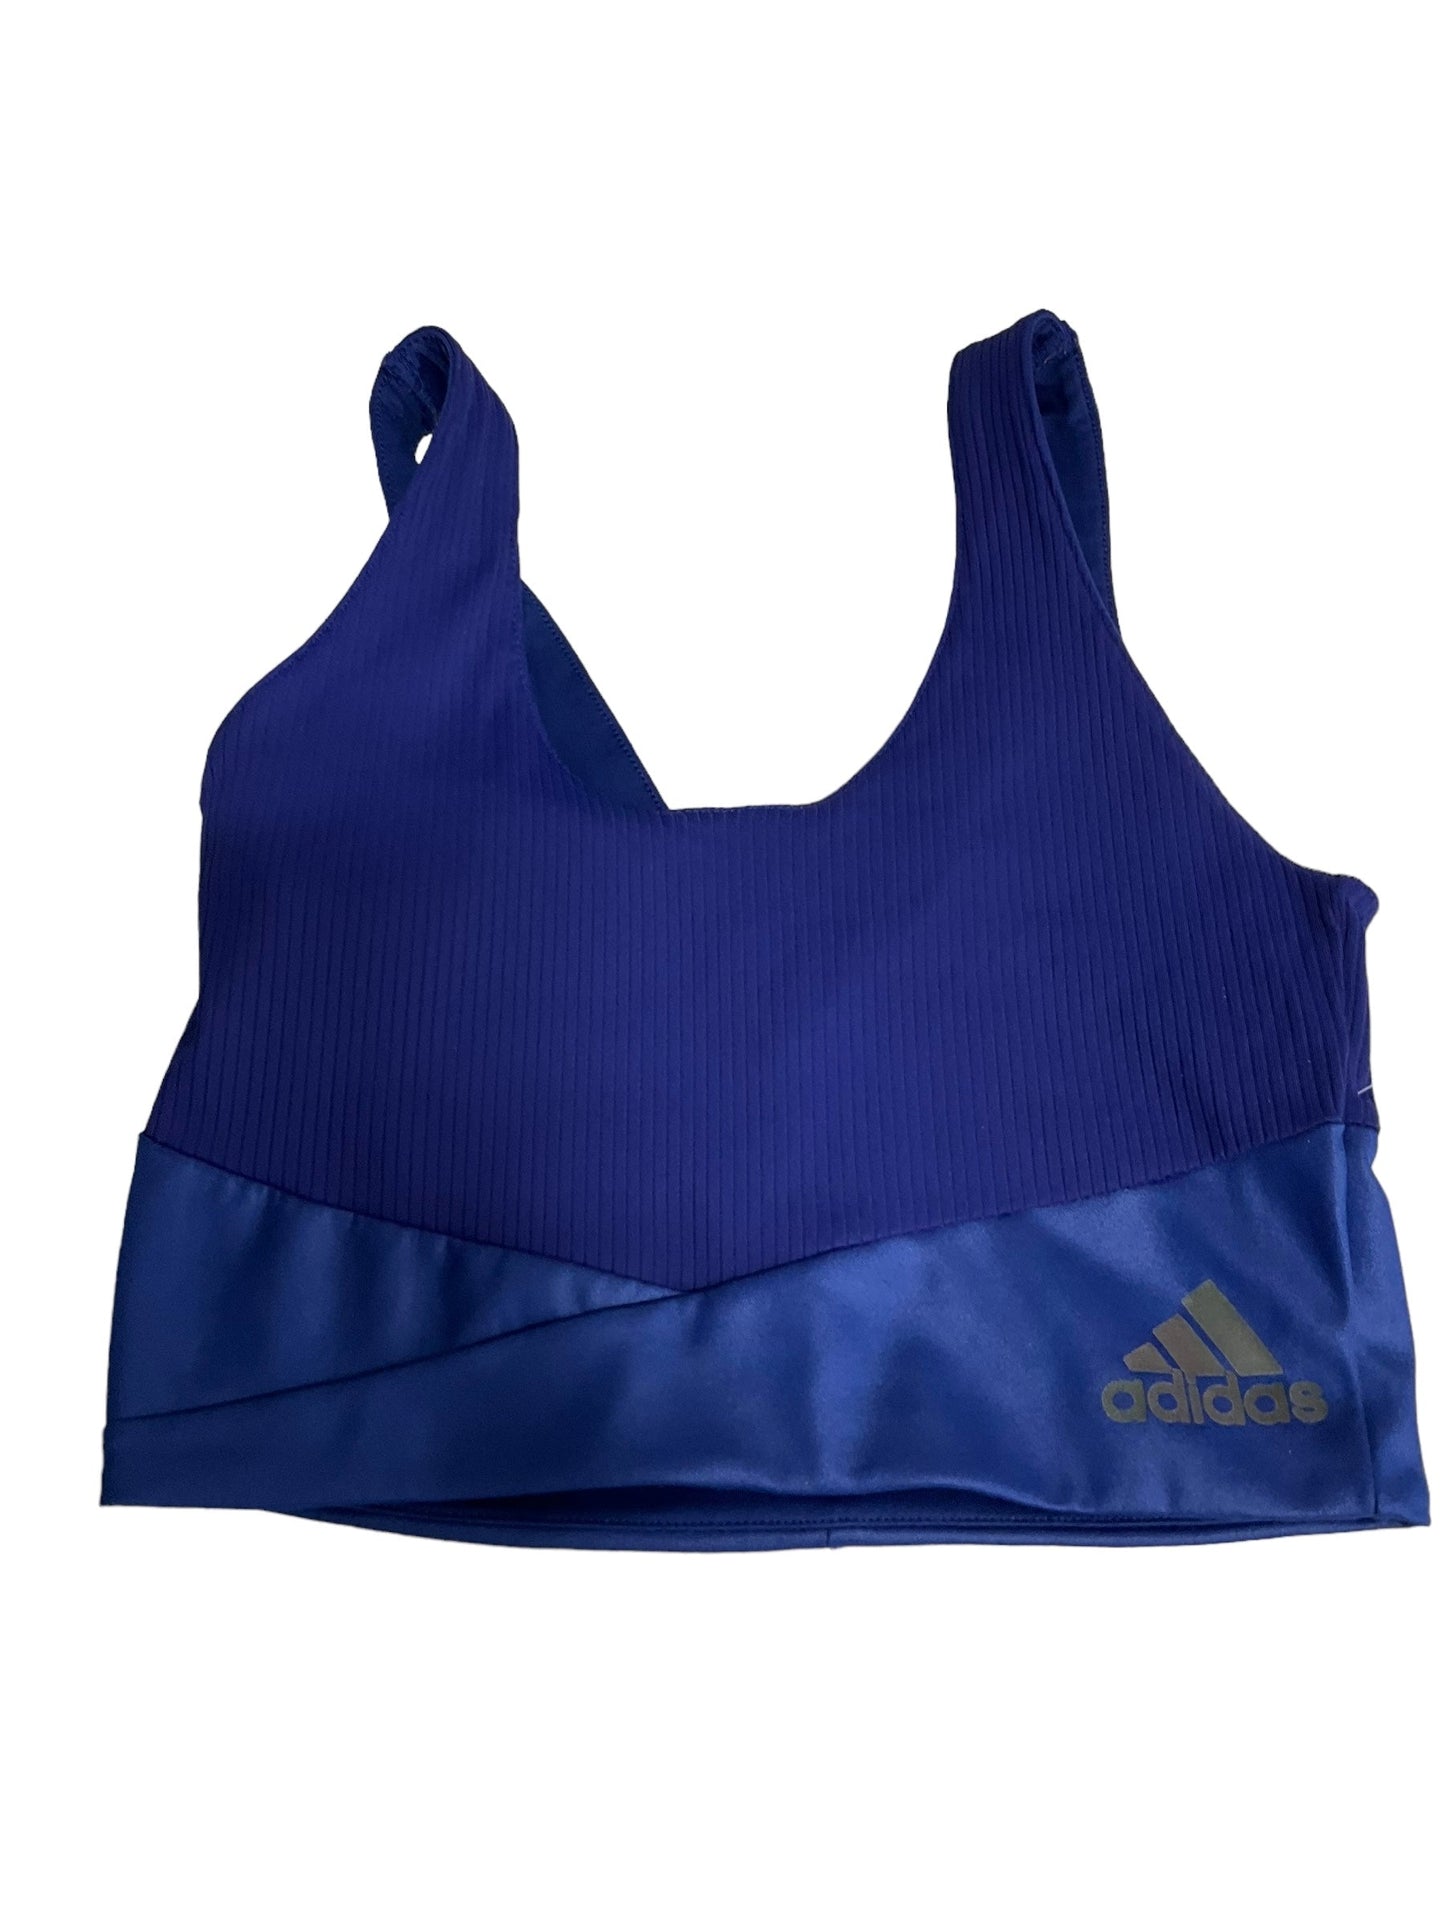 Blue Athletic Bra Adidas, Size S